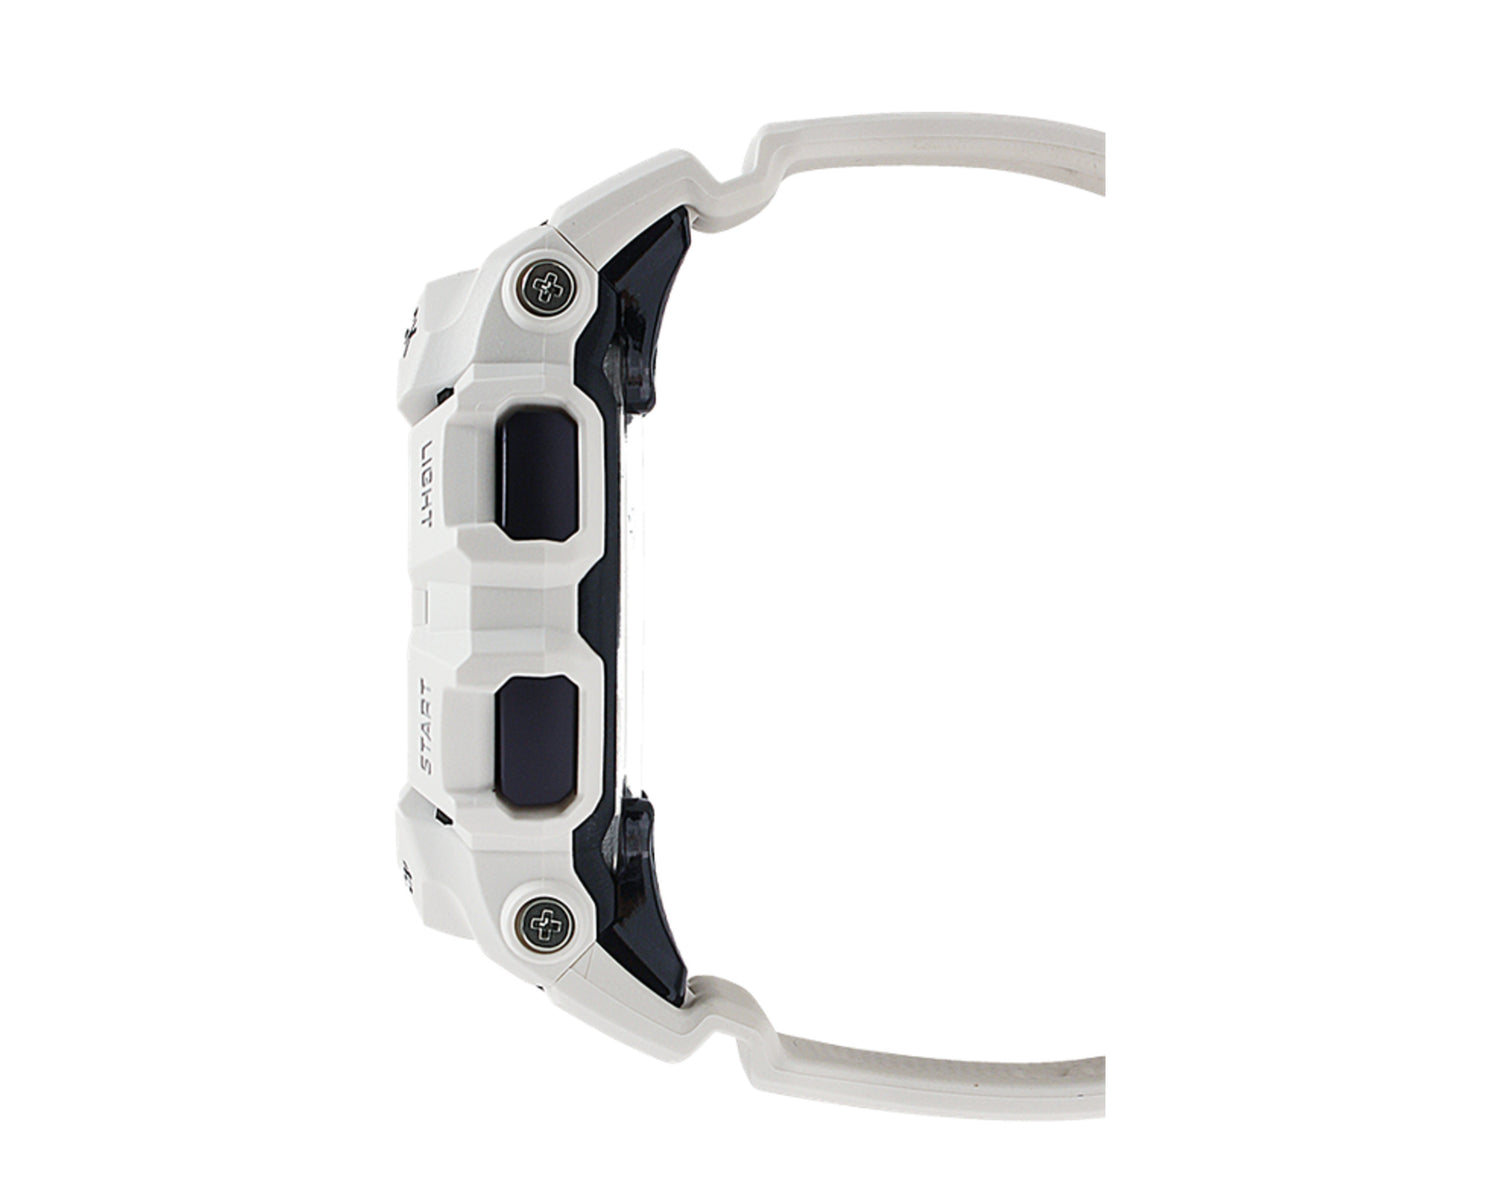 Casio G-Shock GBA900 Analog Digital Resin Watch